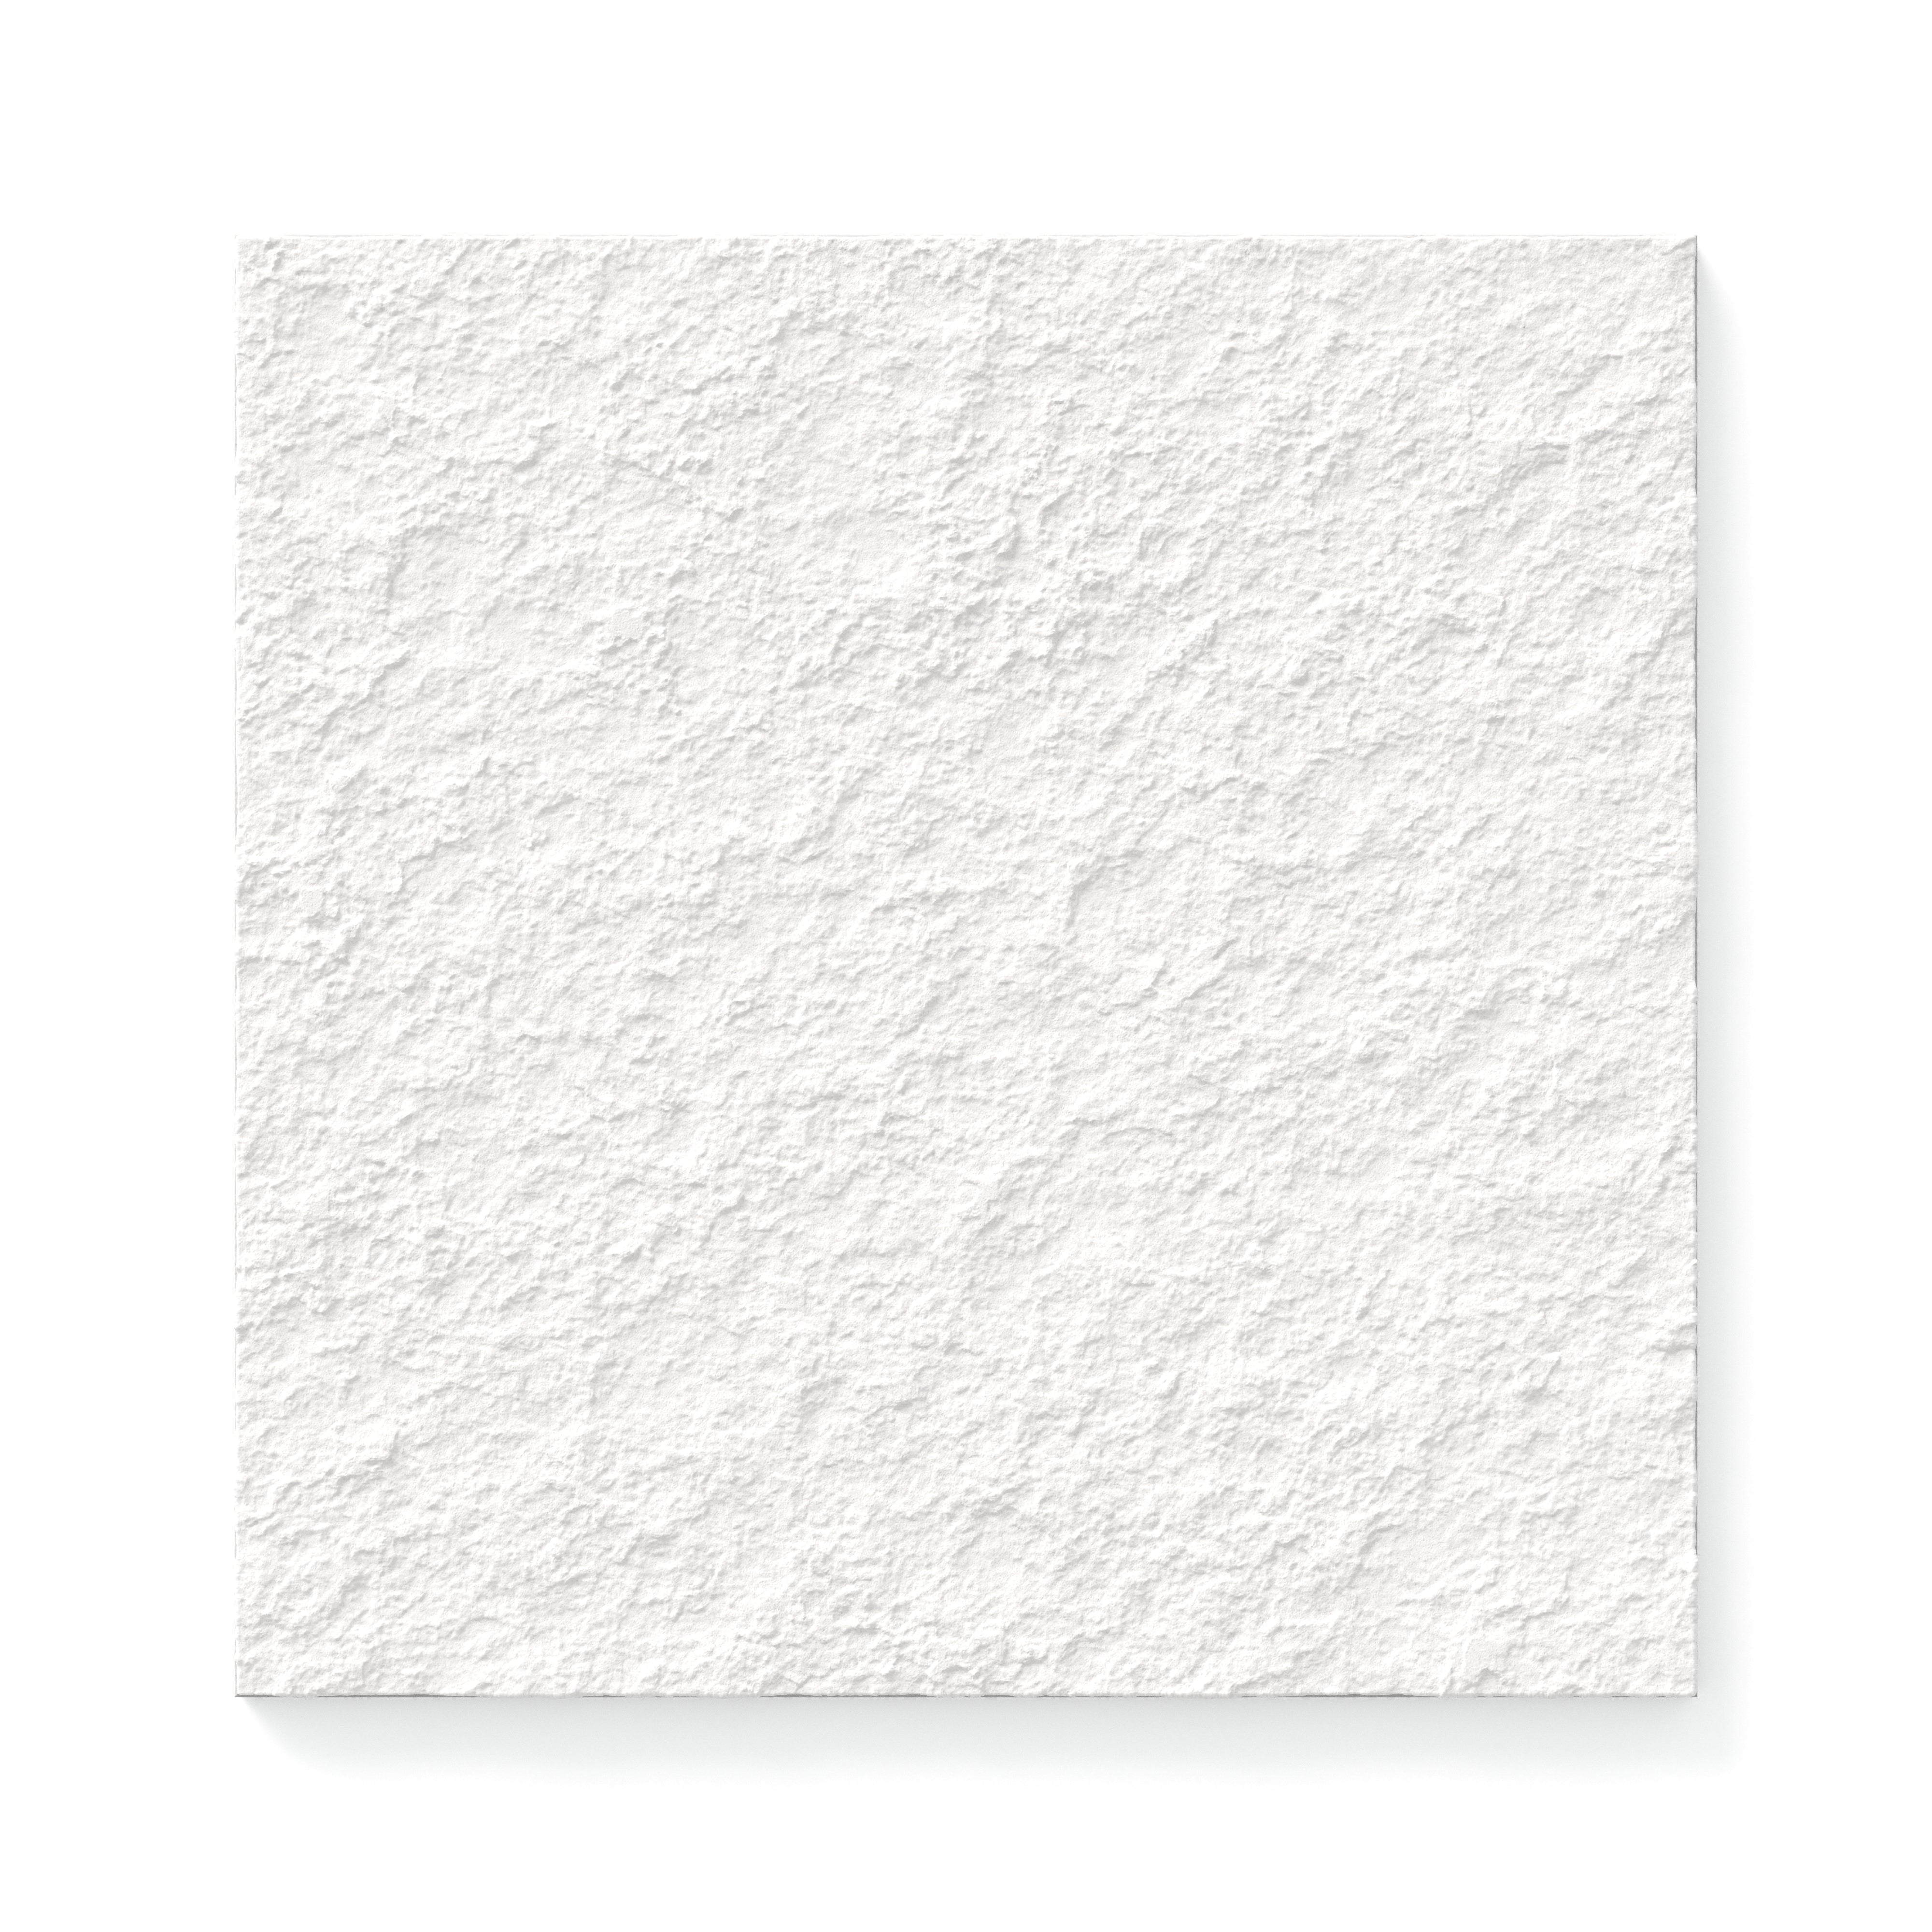 Palmer 12x12 Raw Porcelain Tile in White